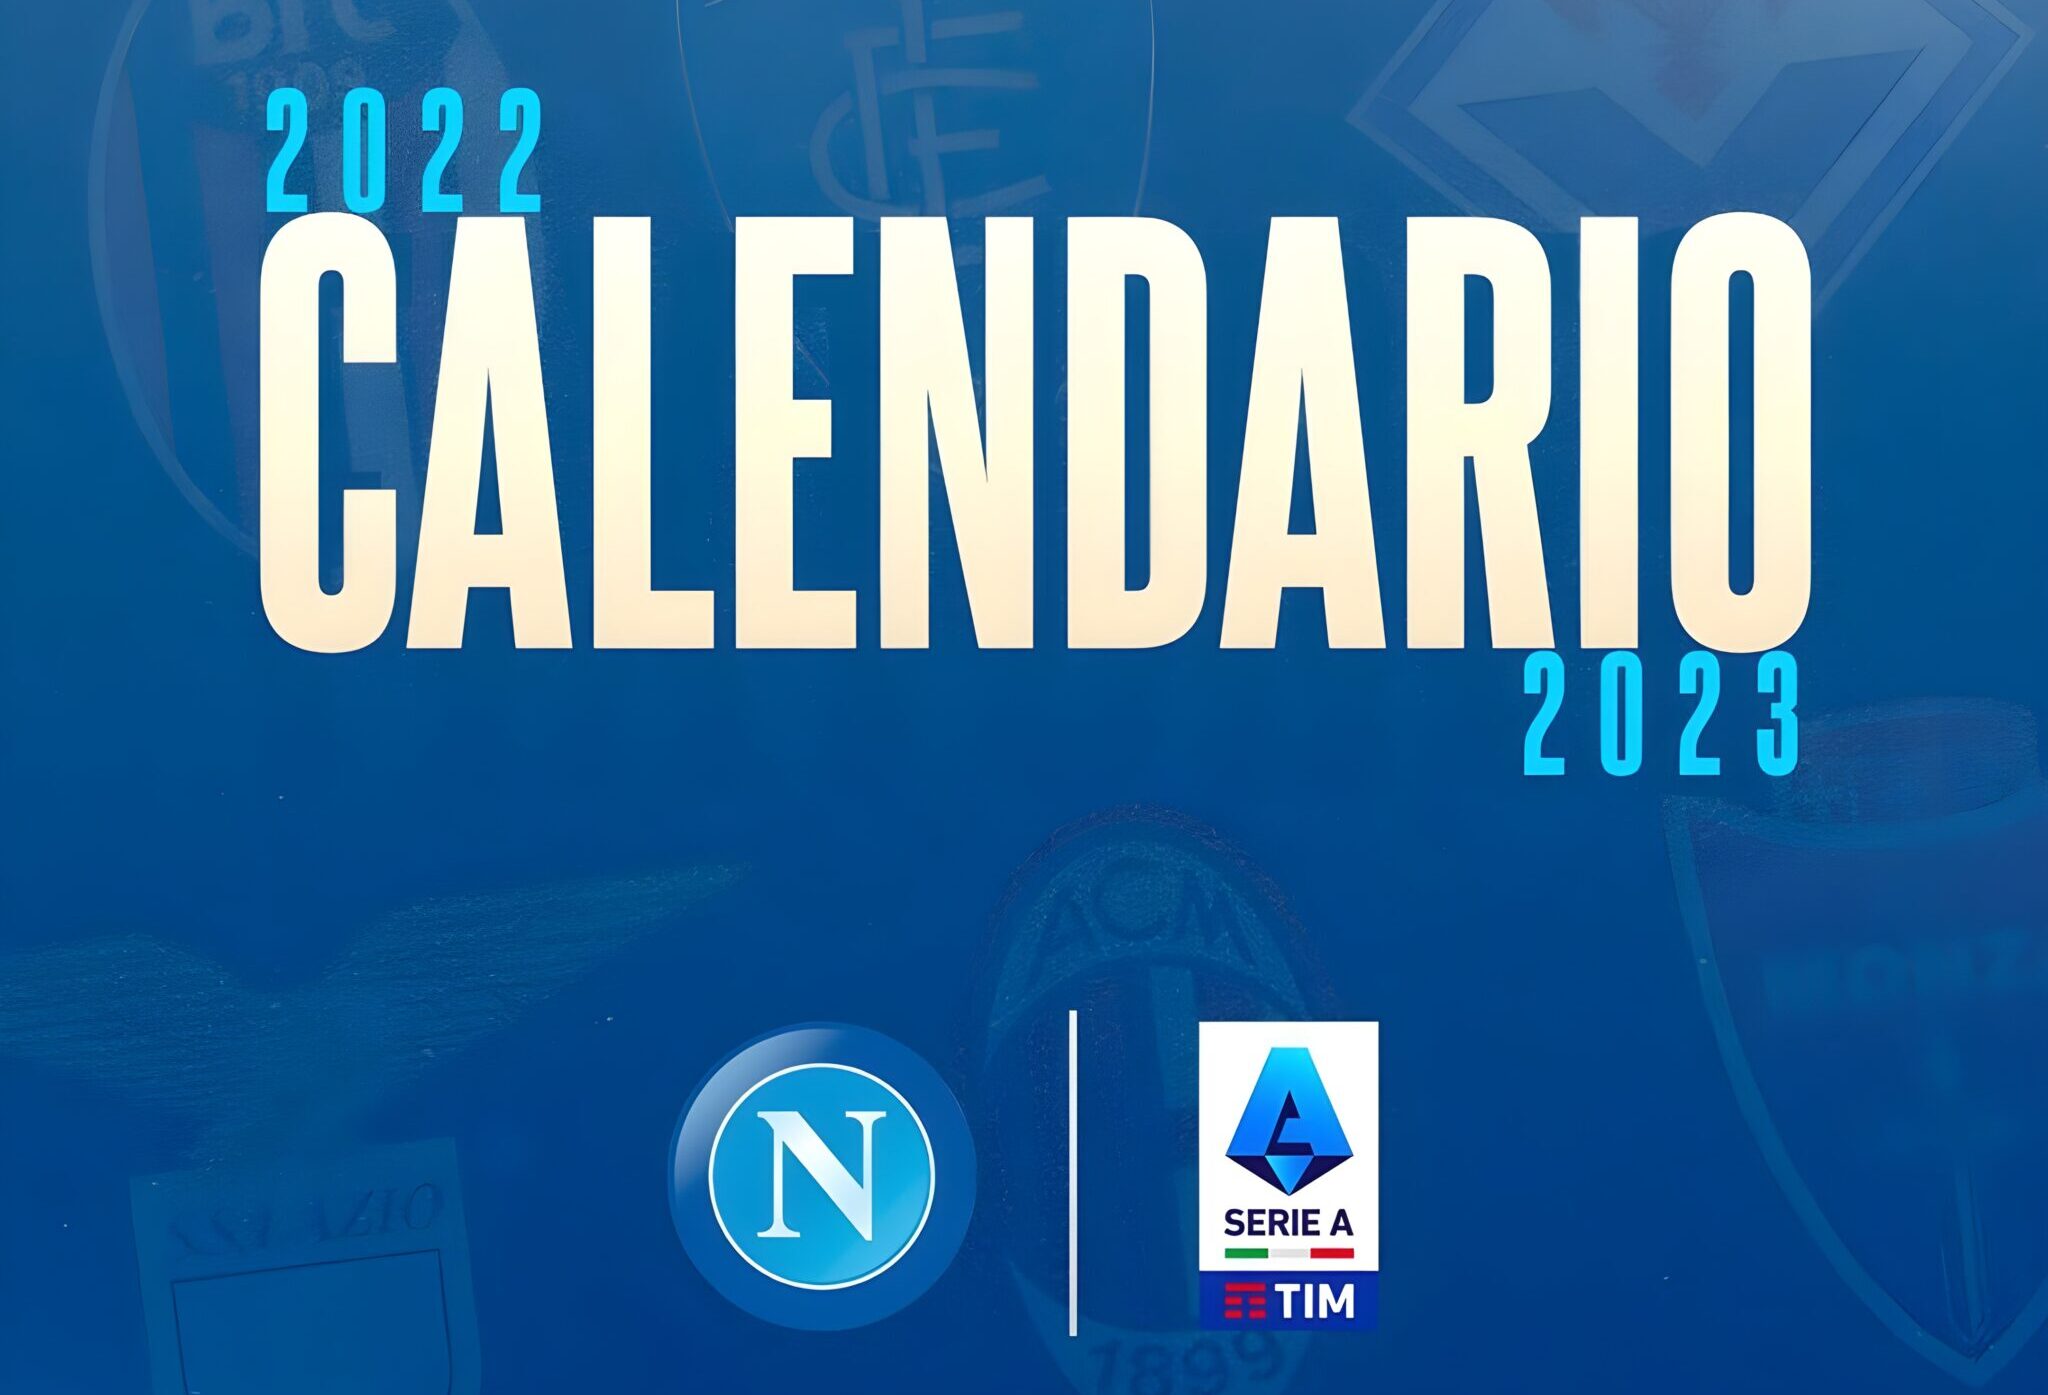 Napoli Serie A 2022 2023 カレンダー ロゴと表紙